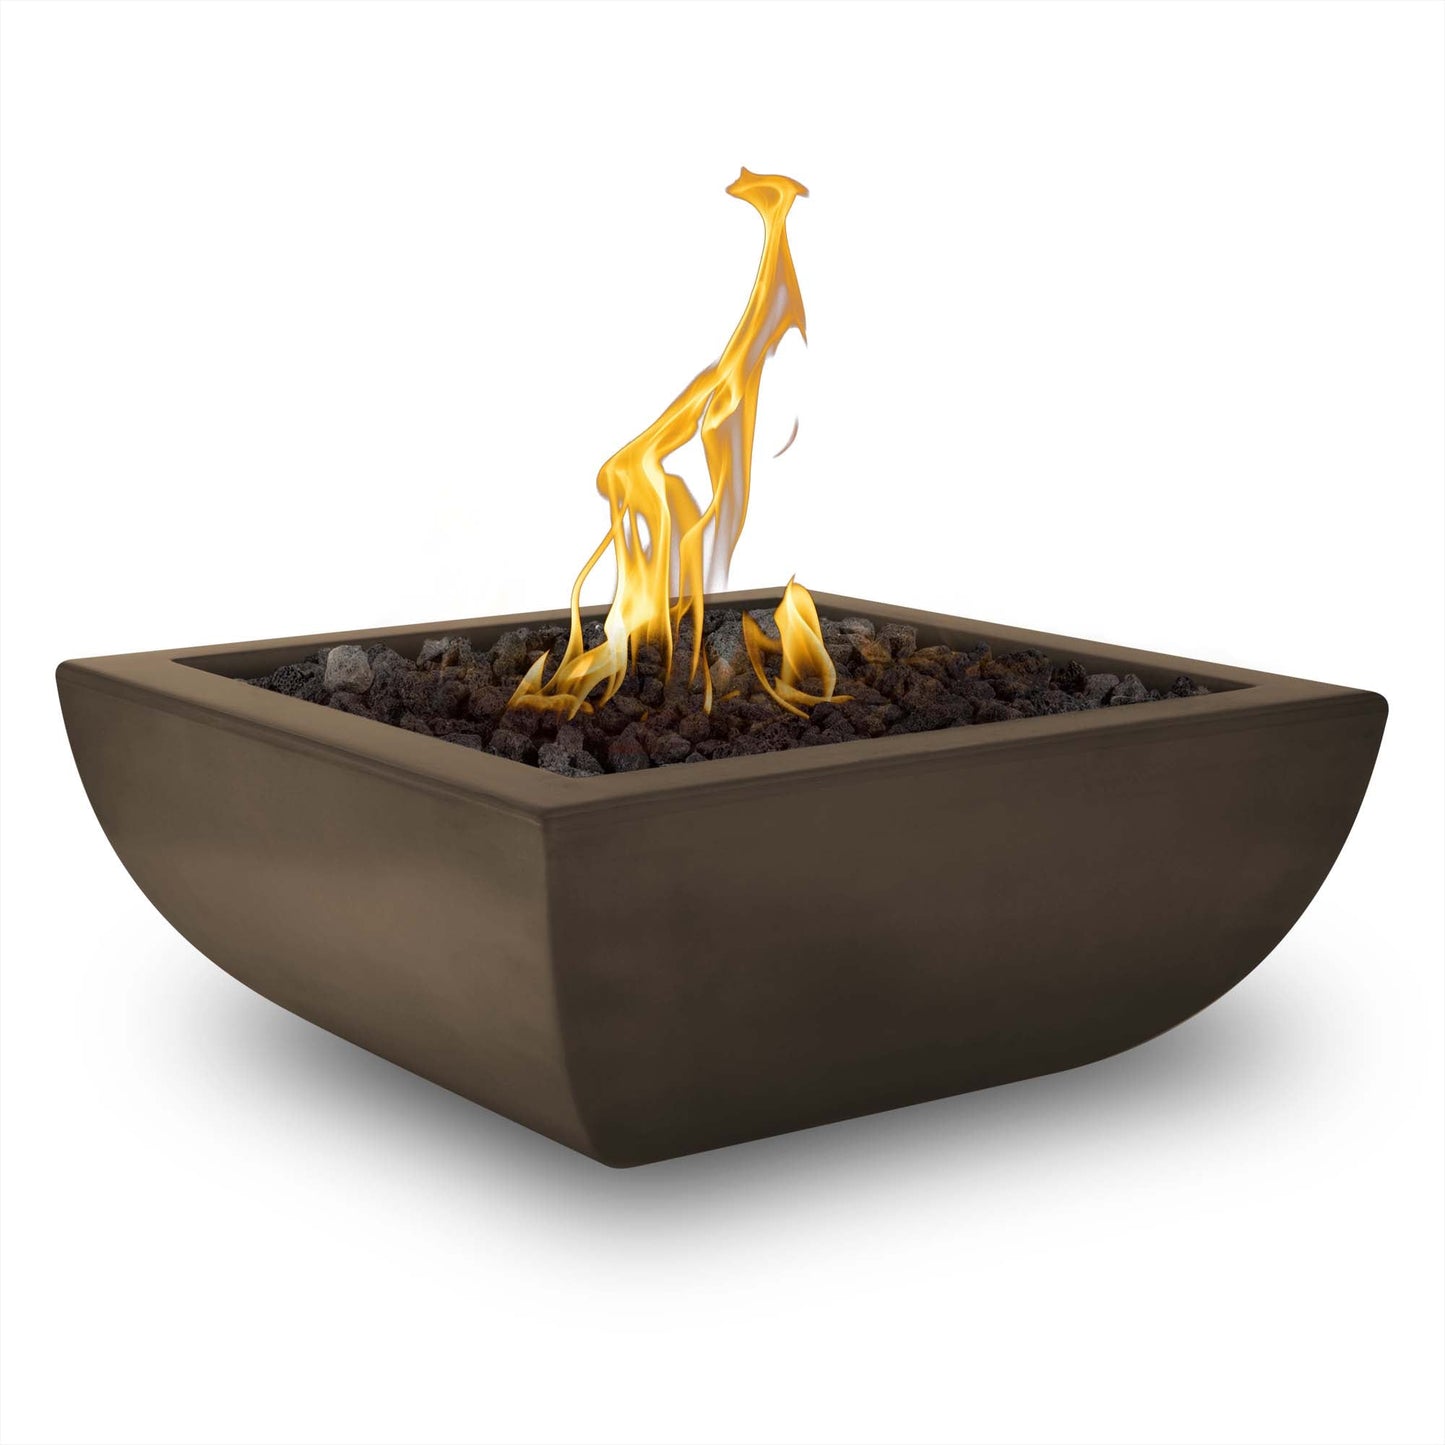 The Outdoor Plus Square Avalon 24" Metallic Bronze GFRC Concrete Liquid Propane Fire Bowl with Match Lit with Flame Sense Ignition